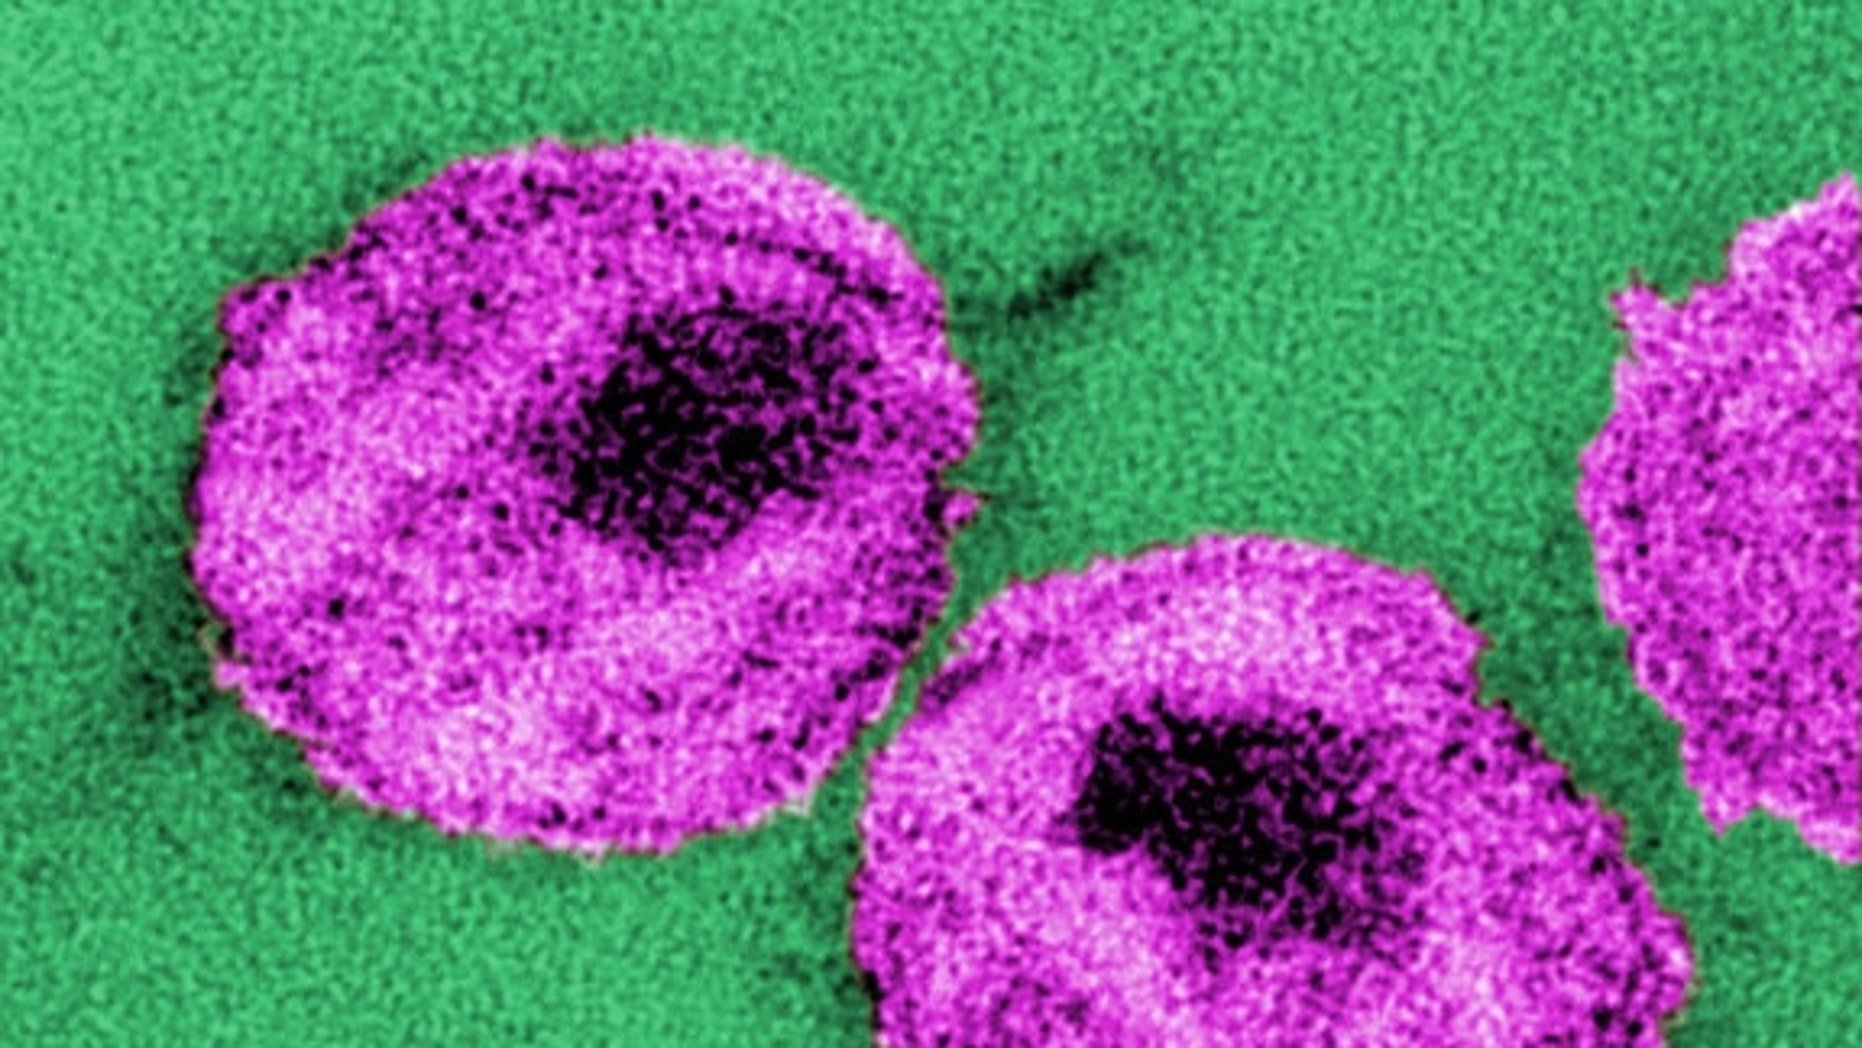 US sexually transmitted disease epidemic worsening, CDC says